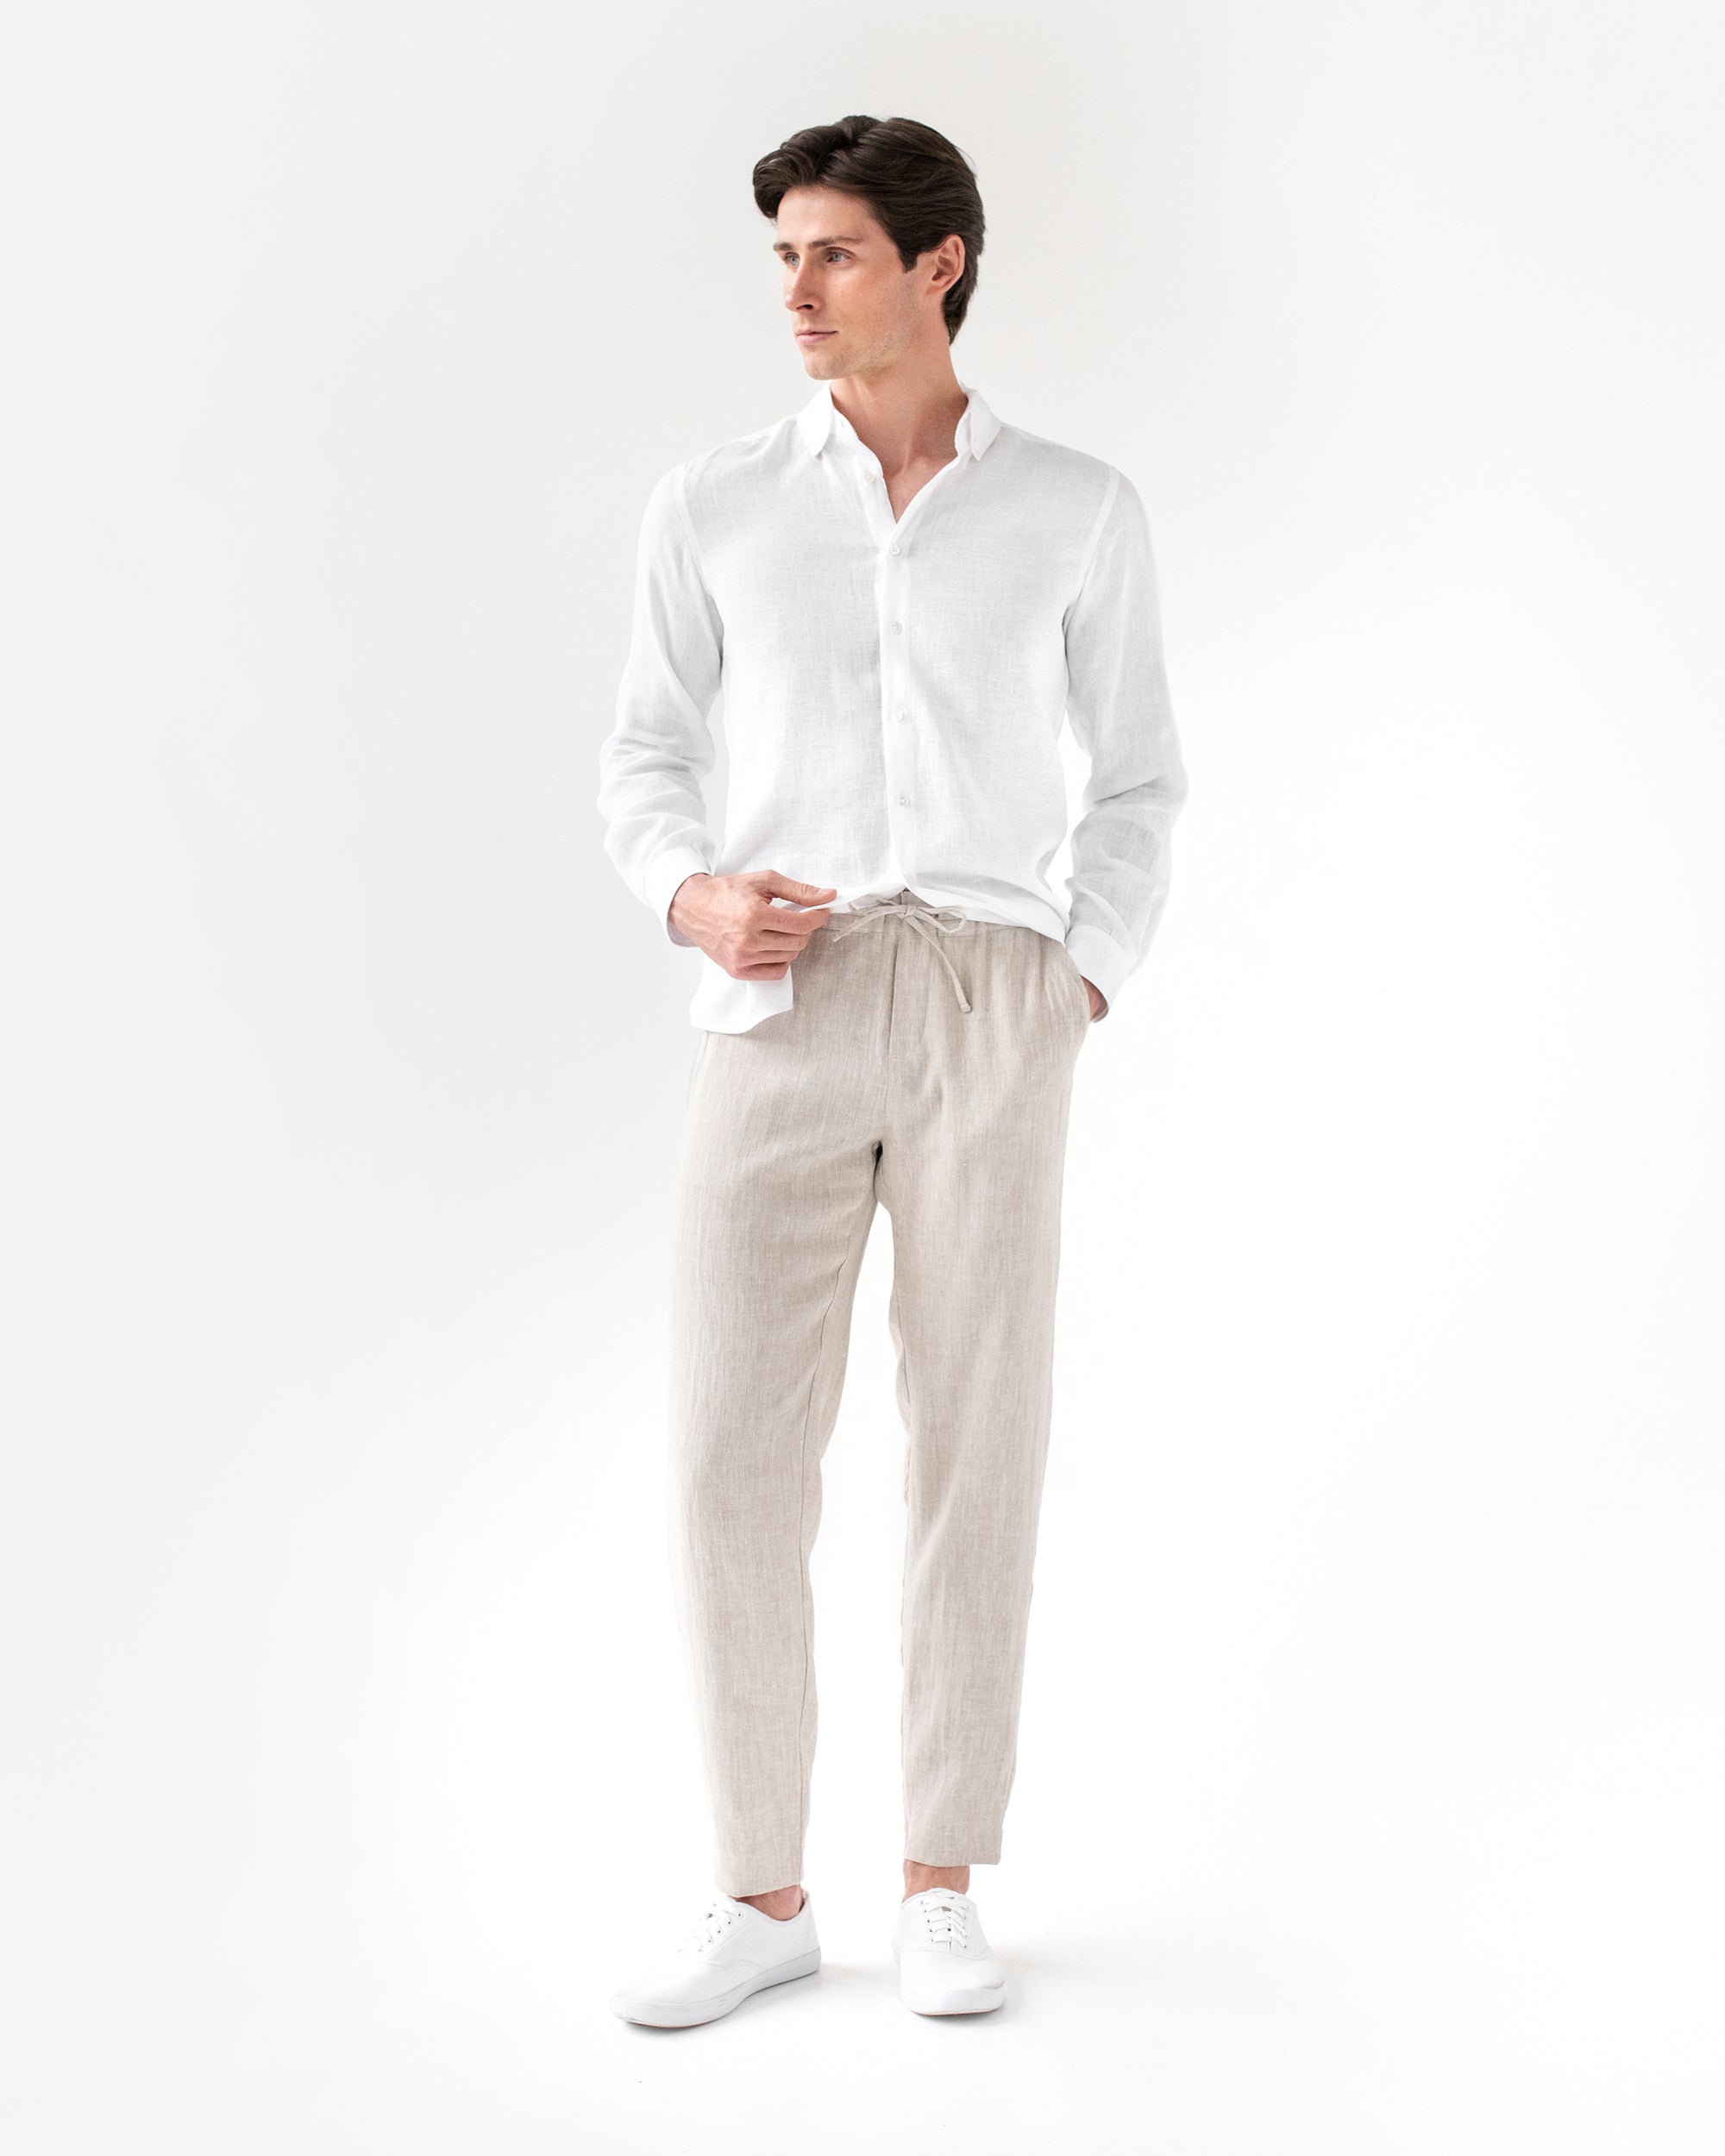 Buy Mens Linen Cotton Pants Online | Formal Cotton Linen Pants for Men |  Linen Cotton Trousers/Pants for Men Online | Ramraj Cotton